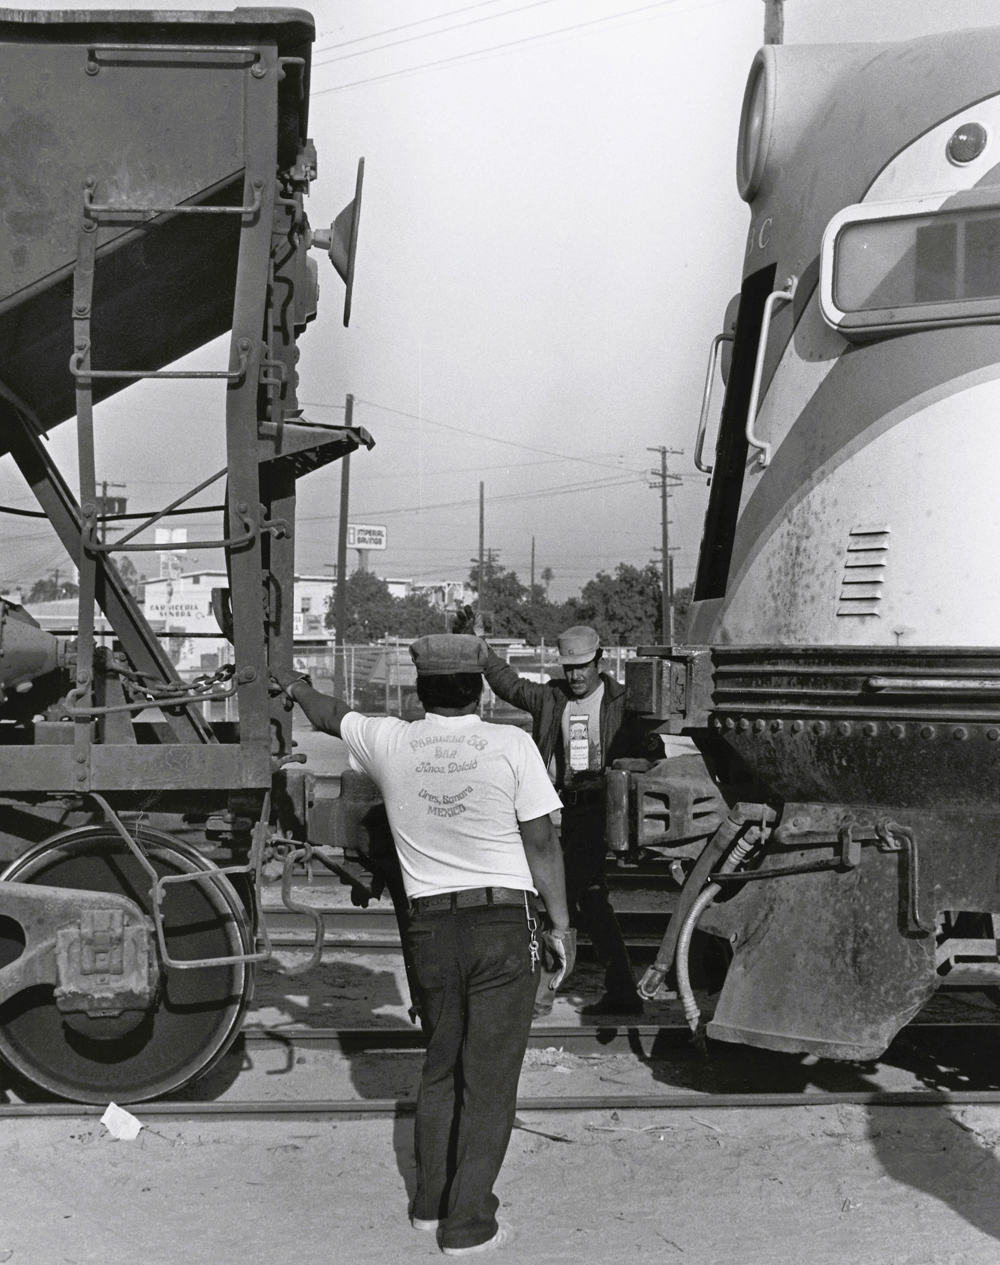 Crew member signaling between two trains